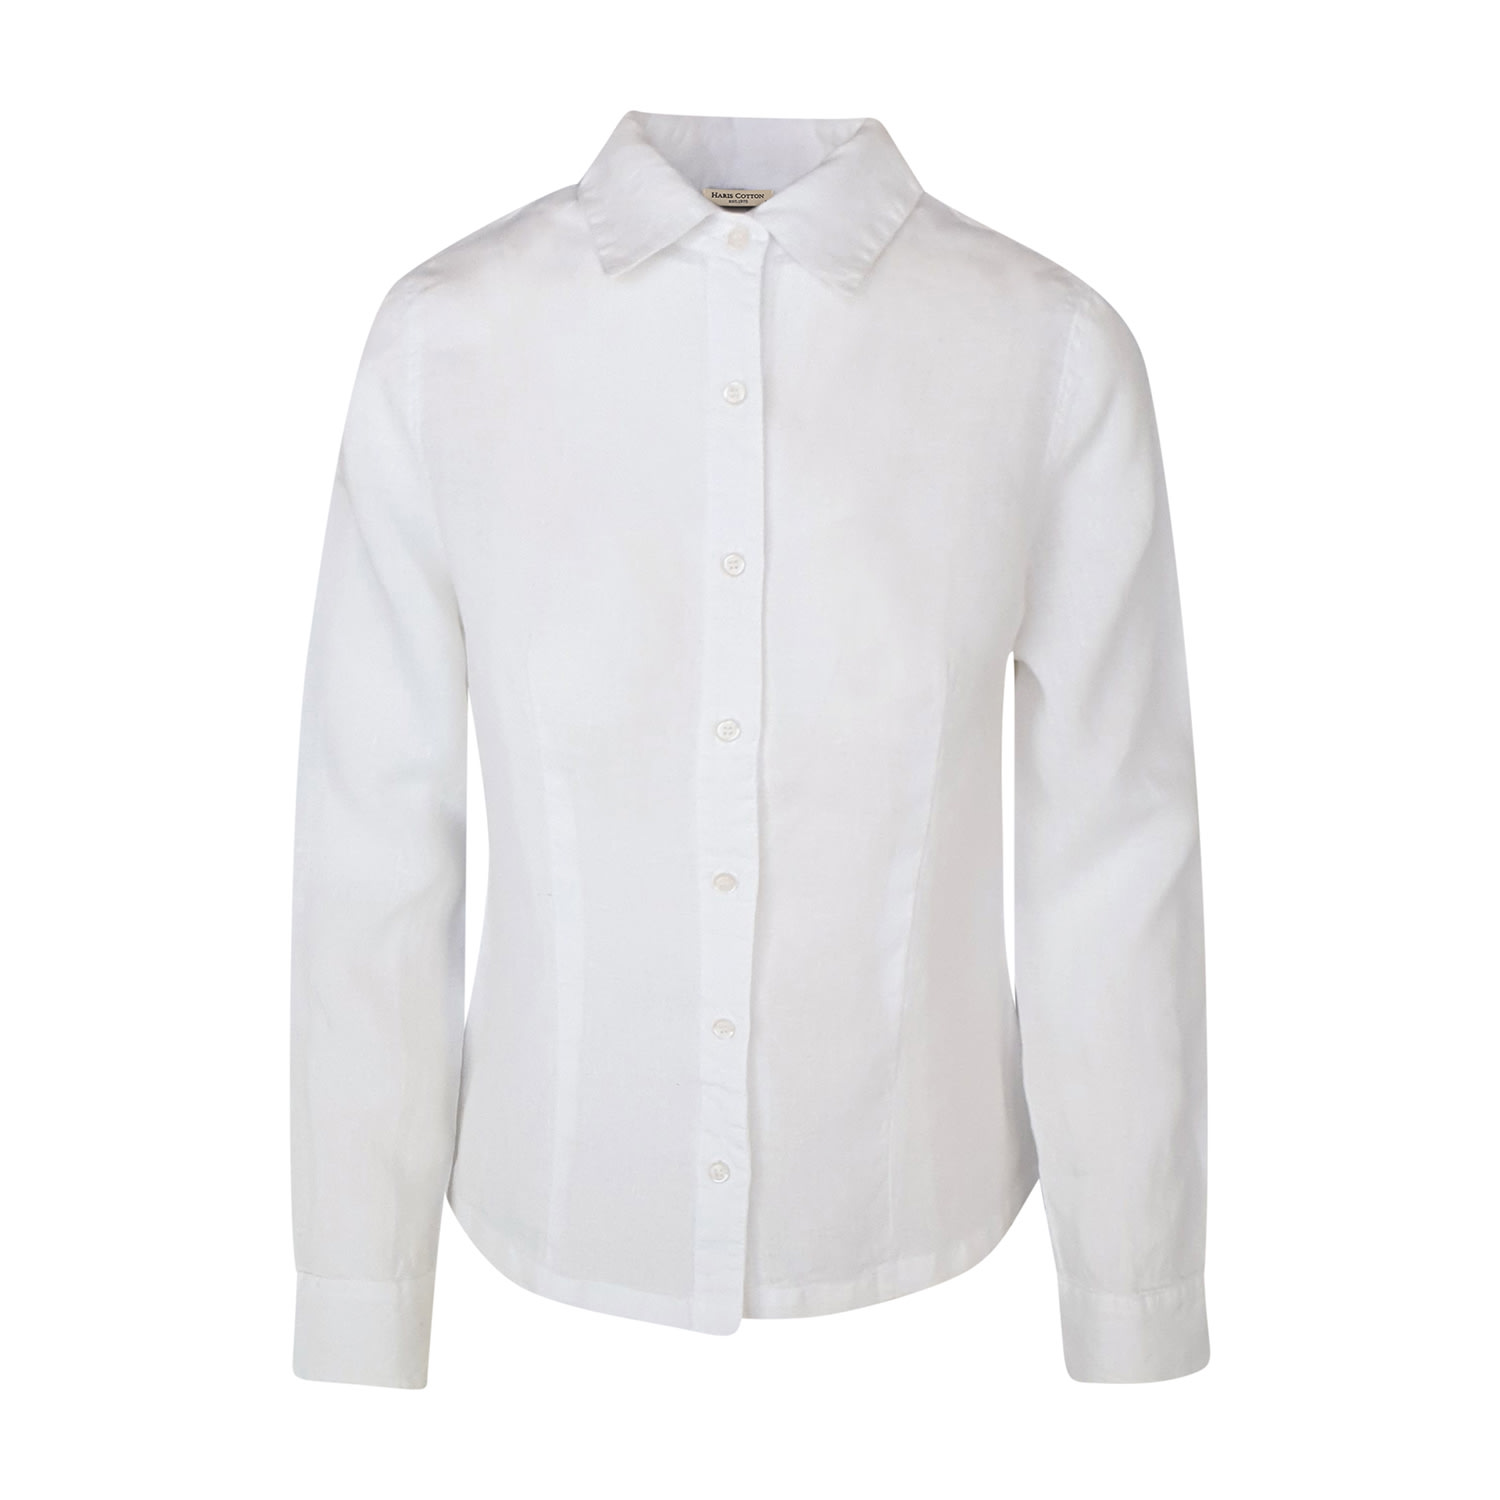 Haris Cotton Women's Linen Long Sleeved Shirt With Darts - White